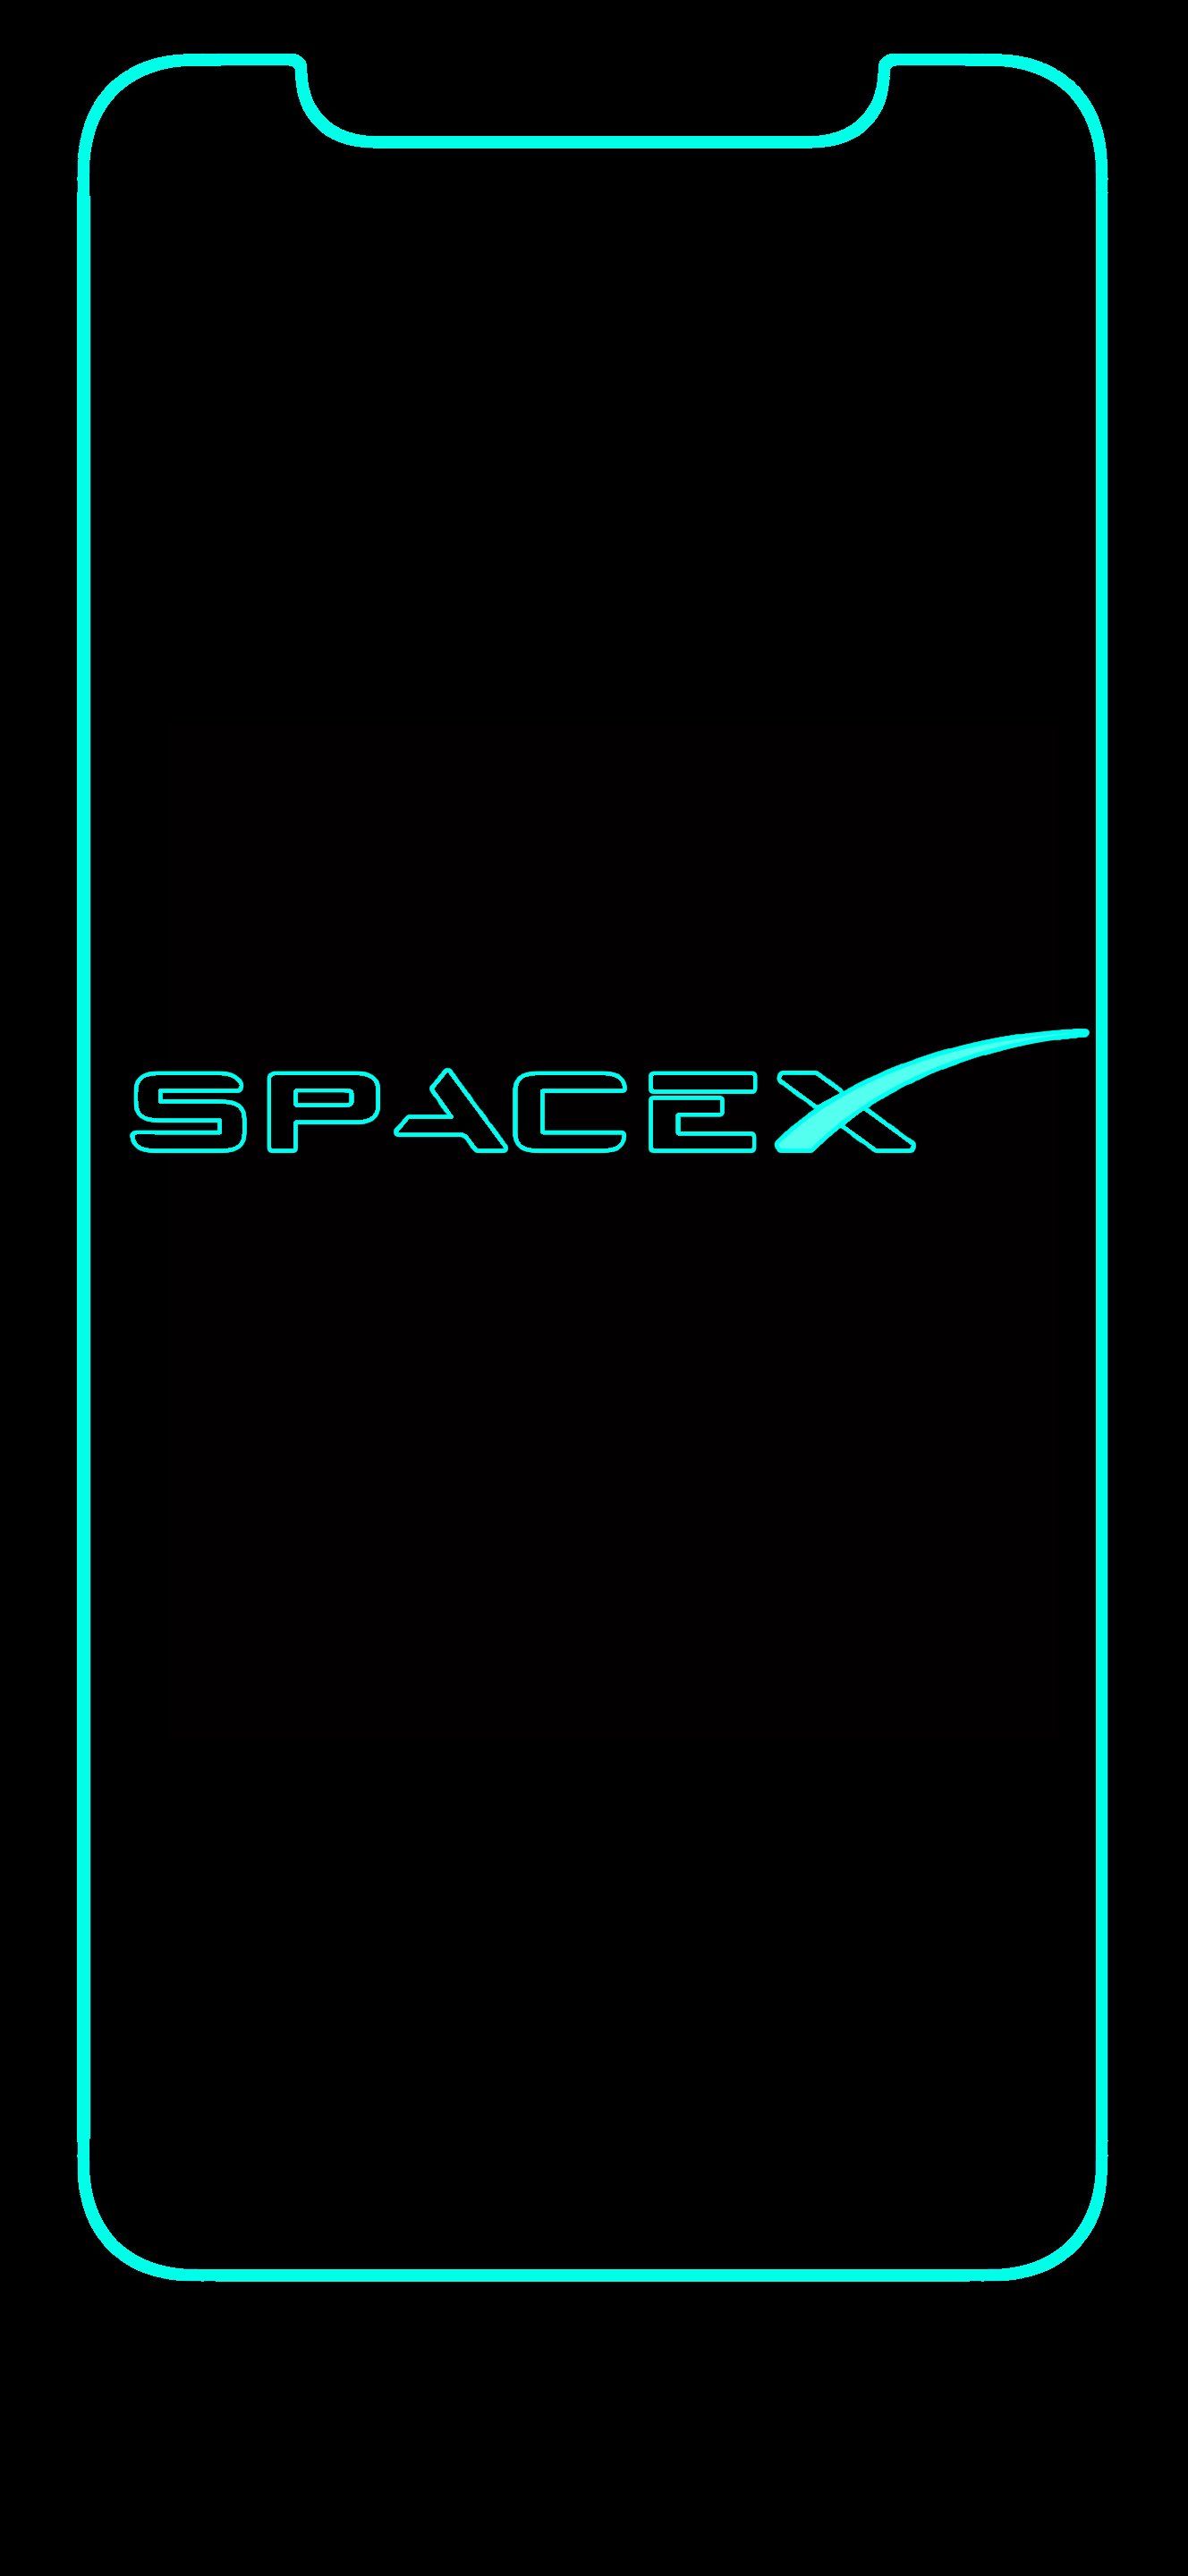 Space X iPhone Wallpaper Free HD Wallpaper